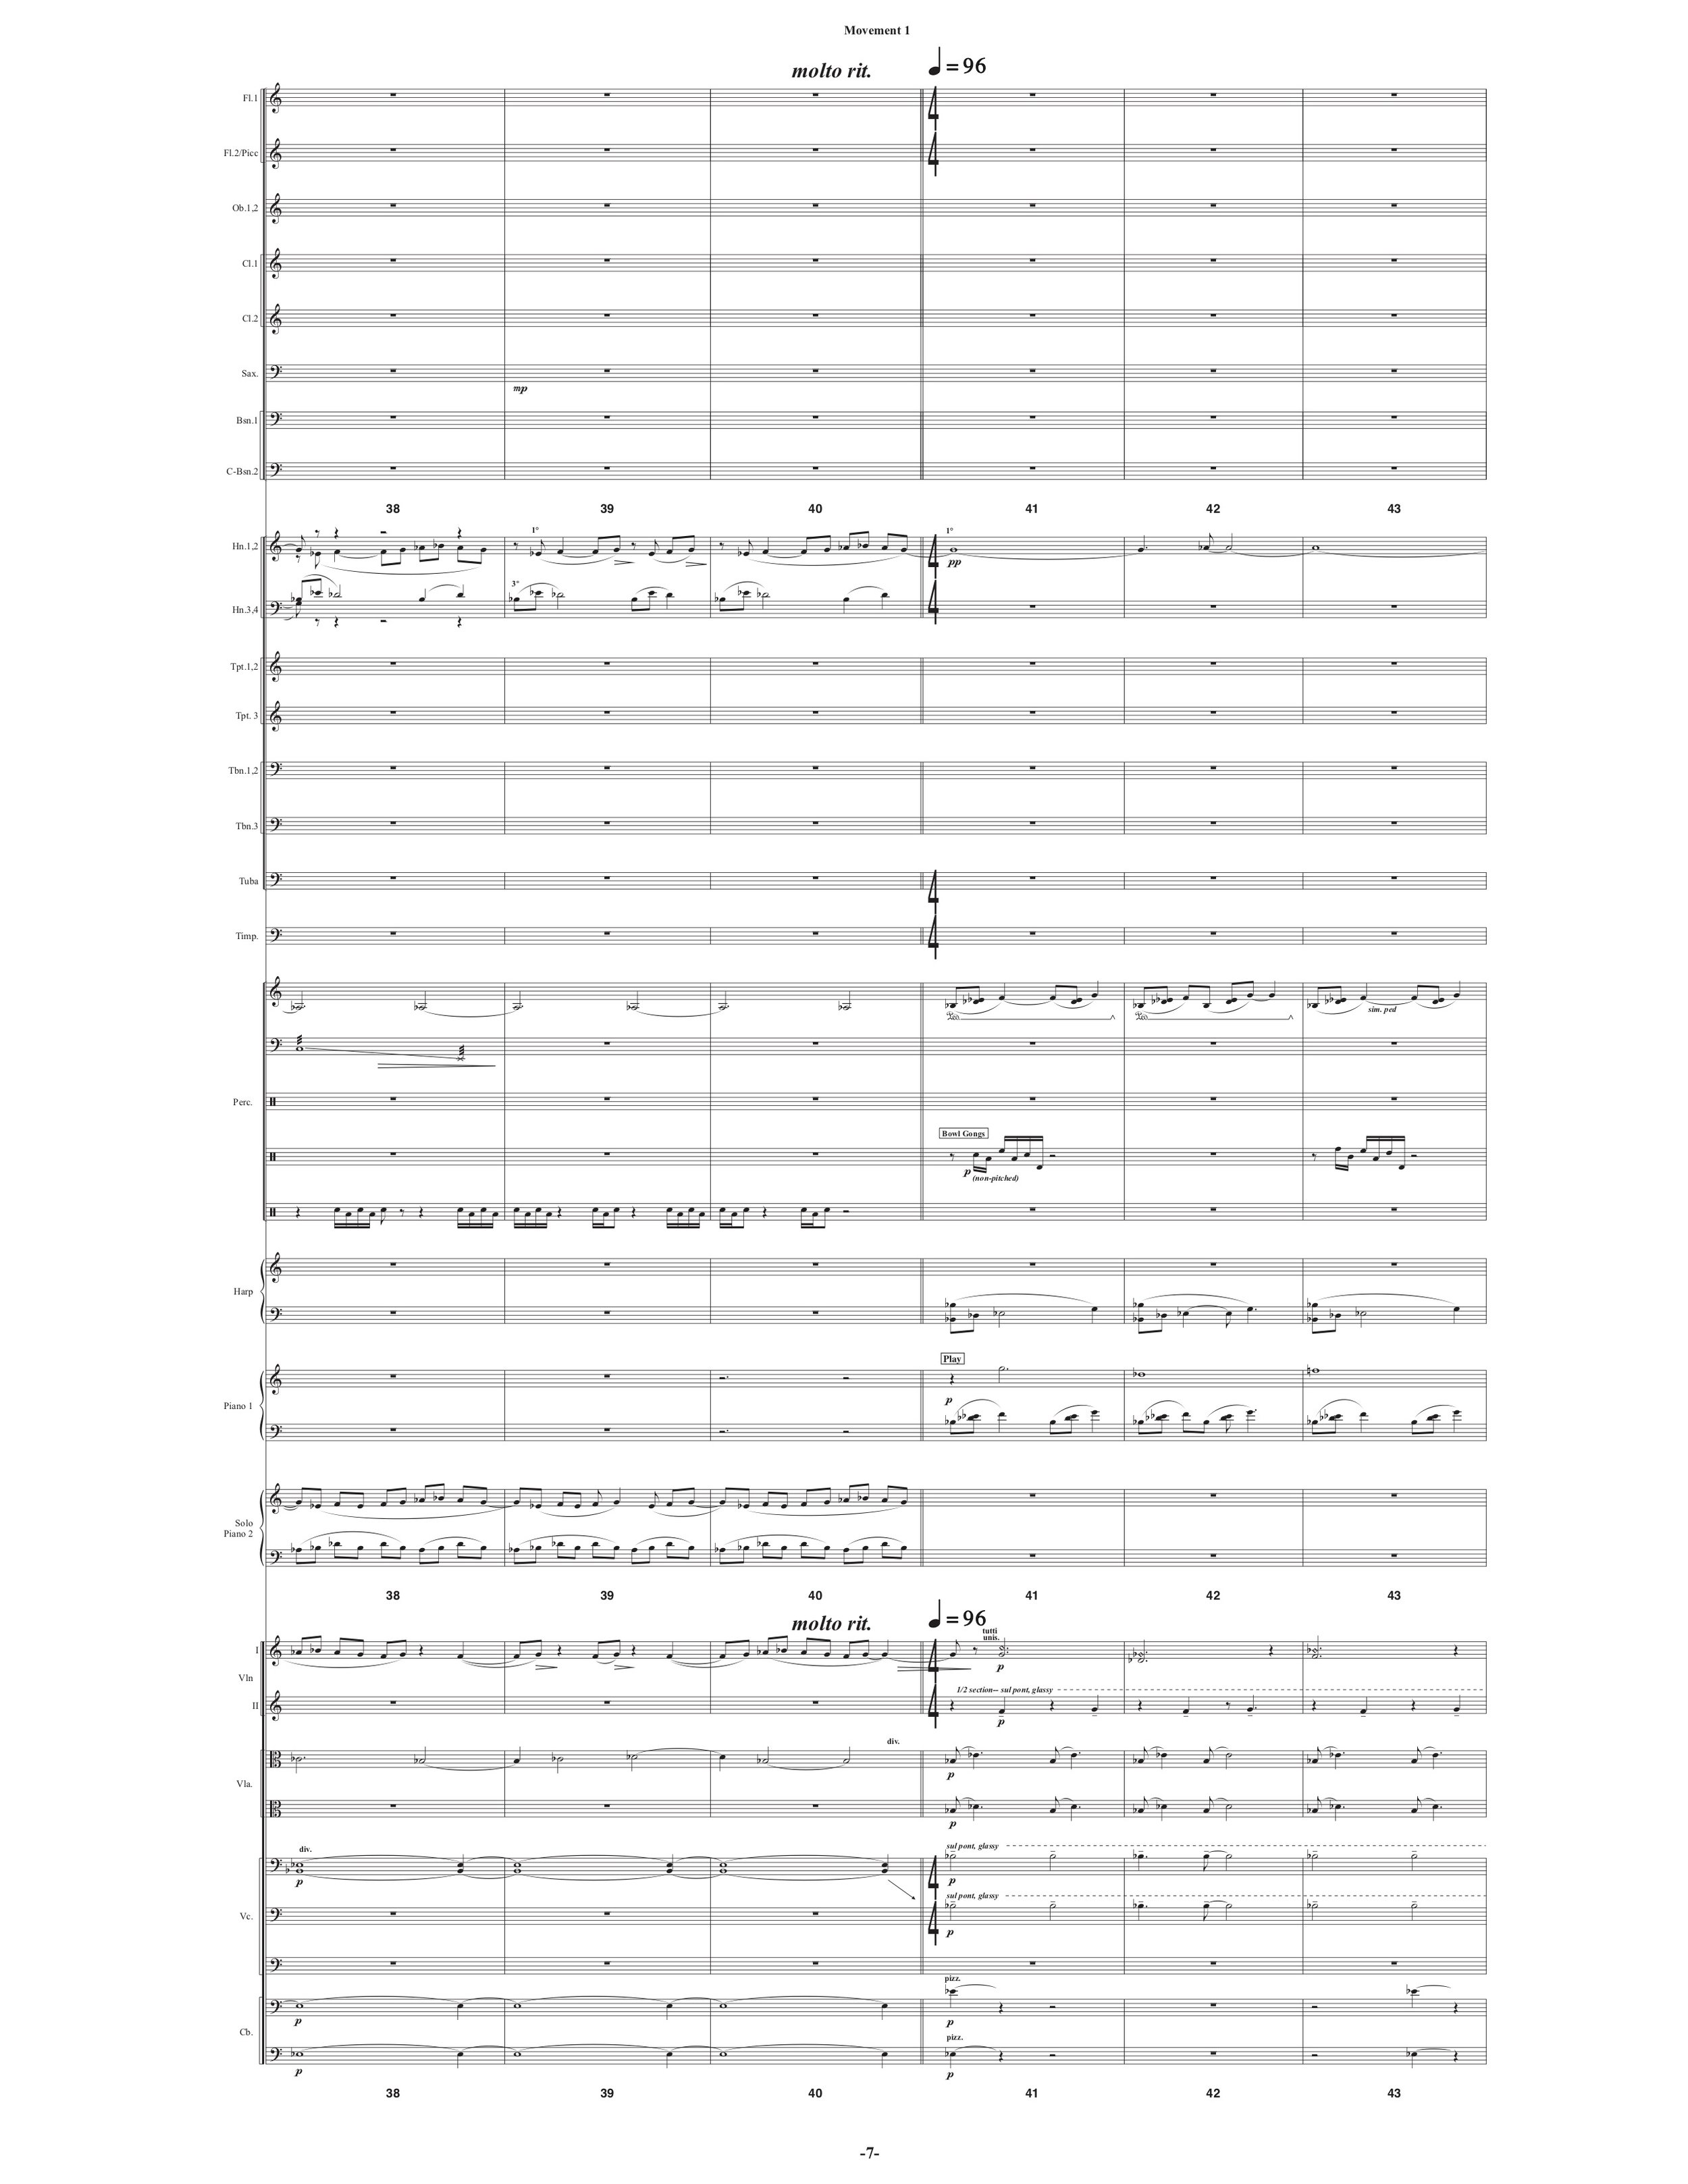 Symphony_Orch & 2 Pianos p12.jpg